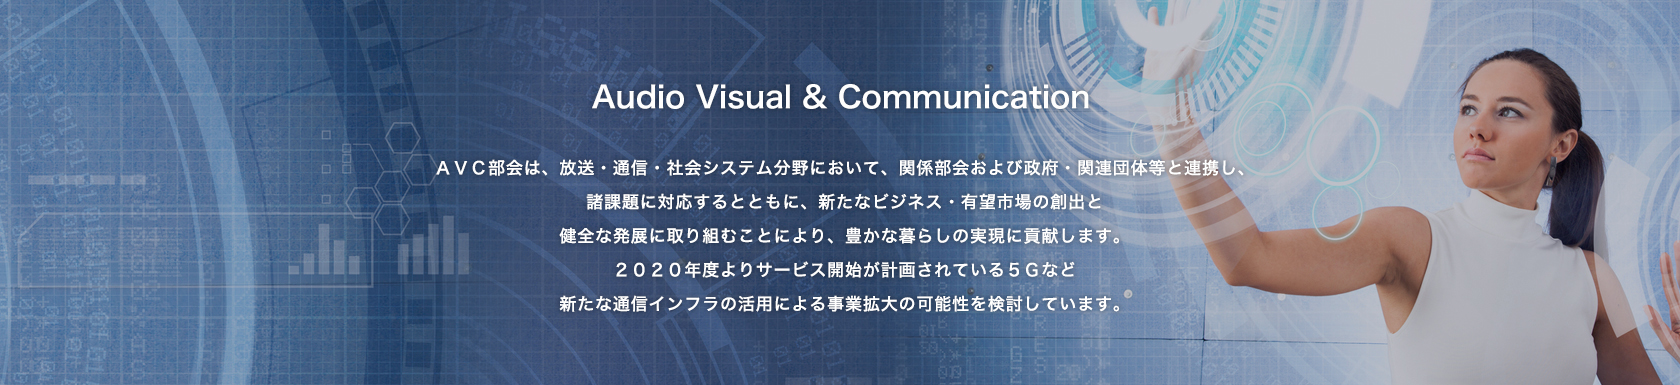 Audio Visual & Communication